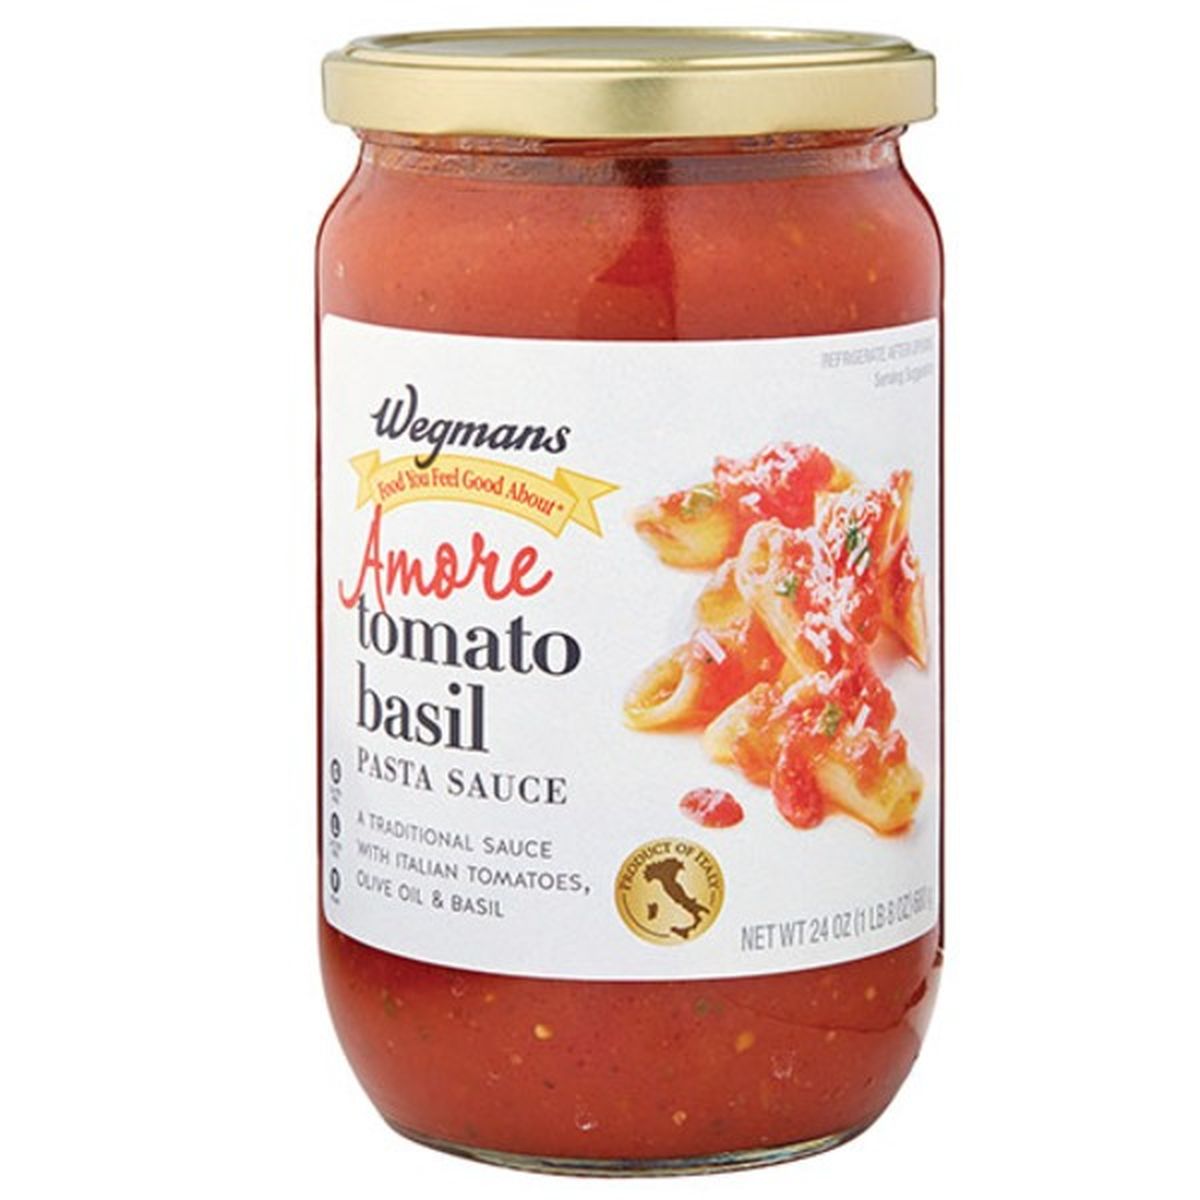 Calories in Wegmans Tomato Basil Pasta Sauce